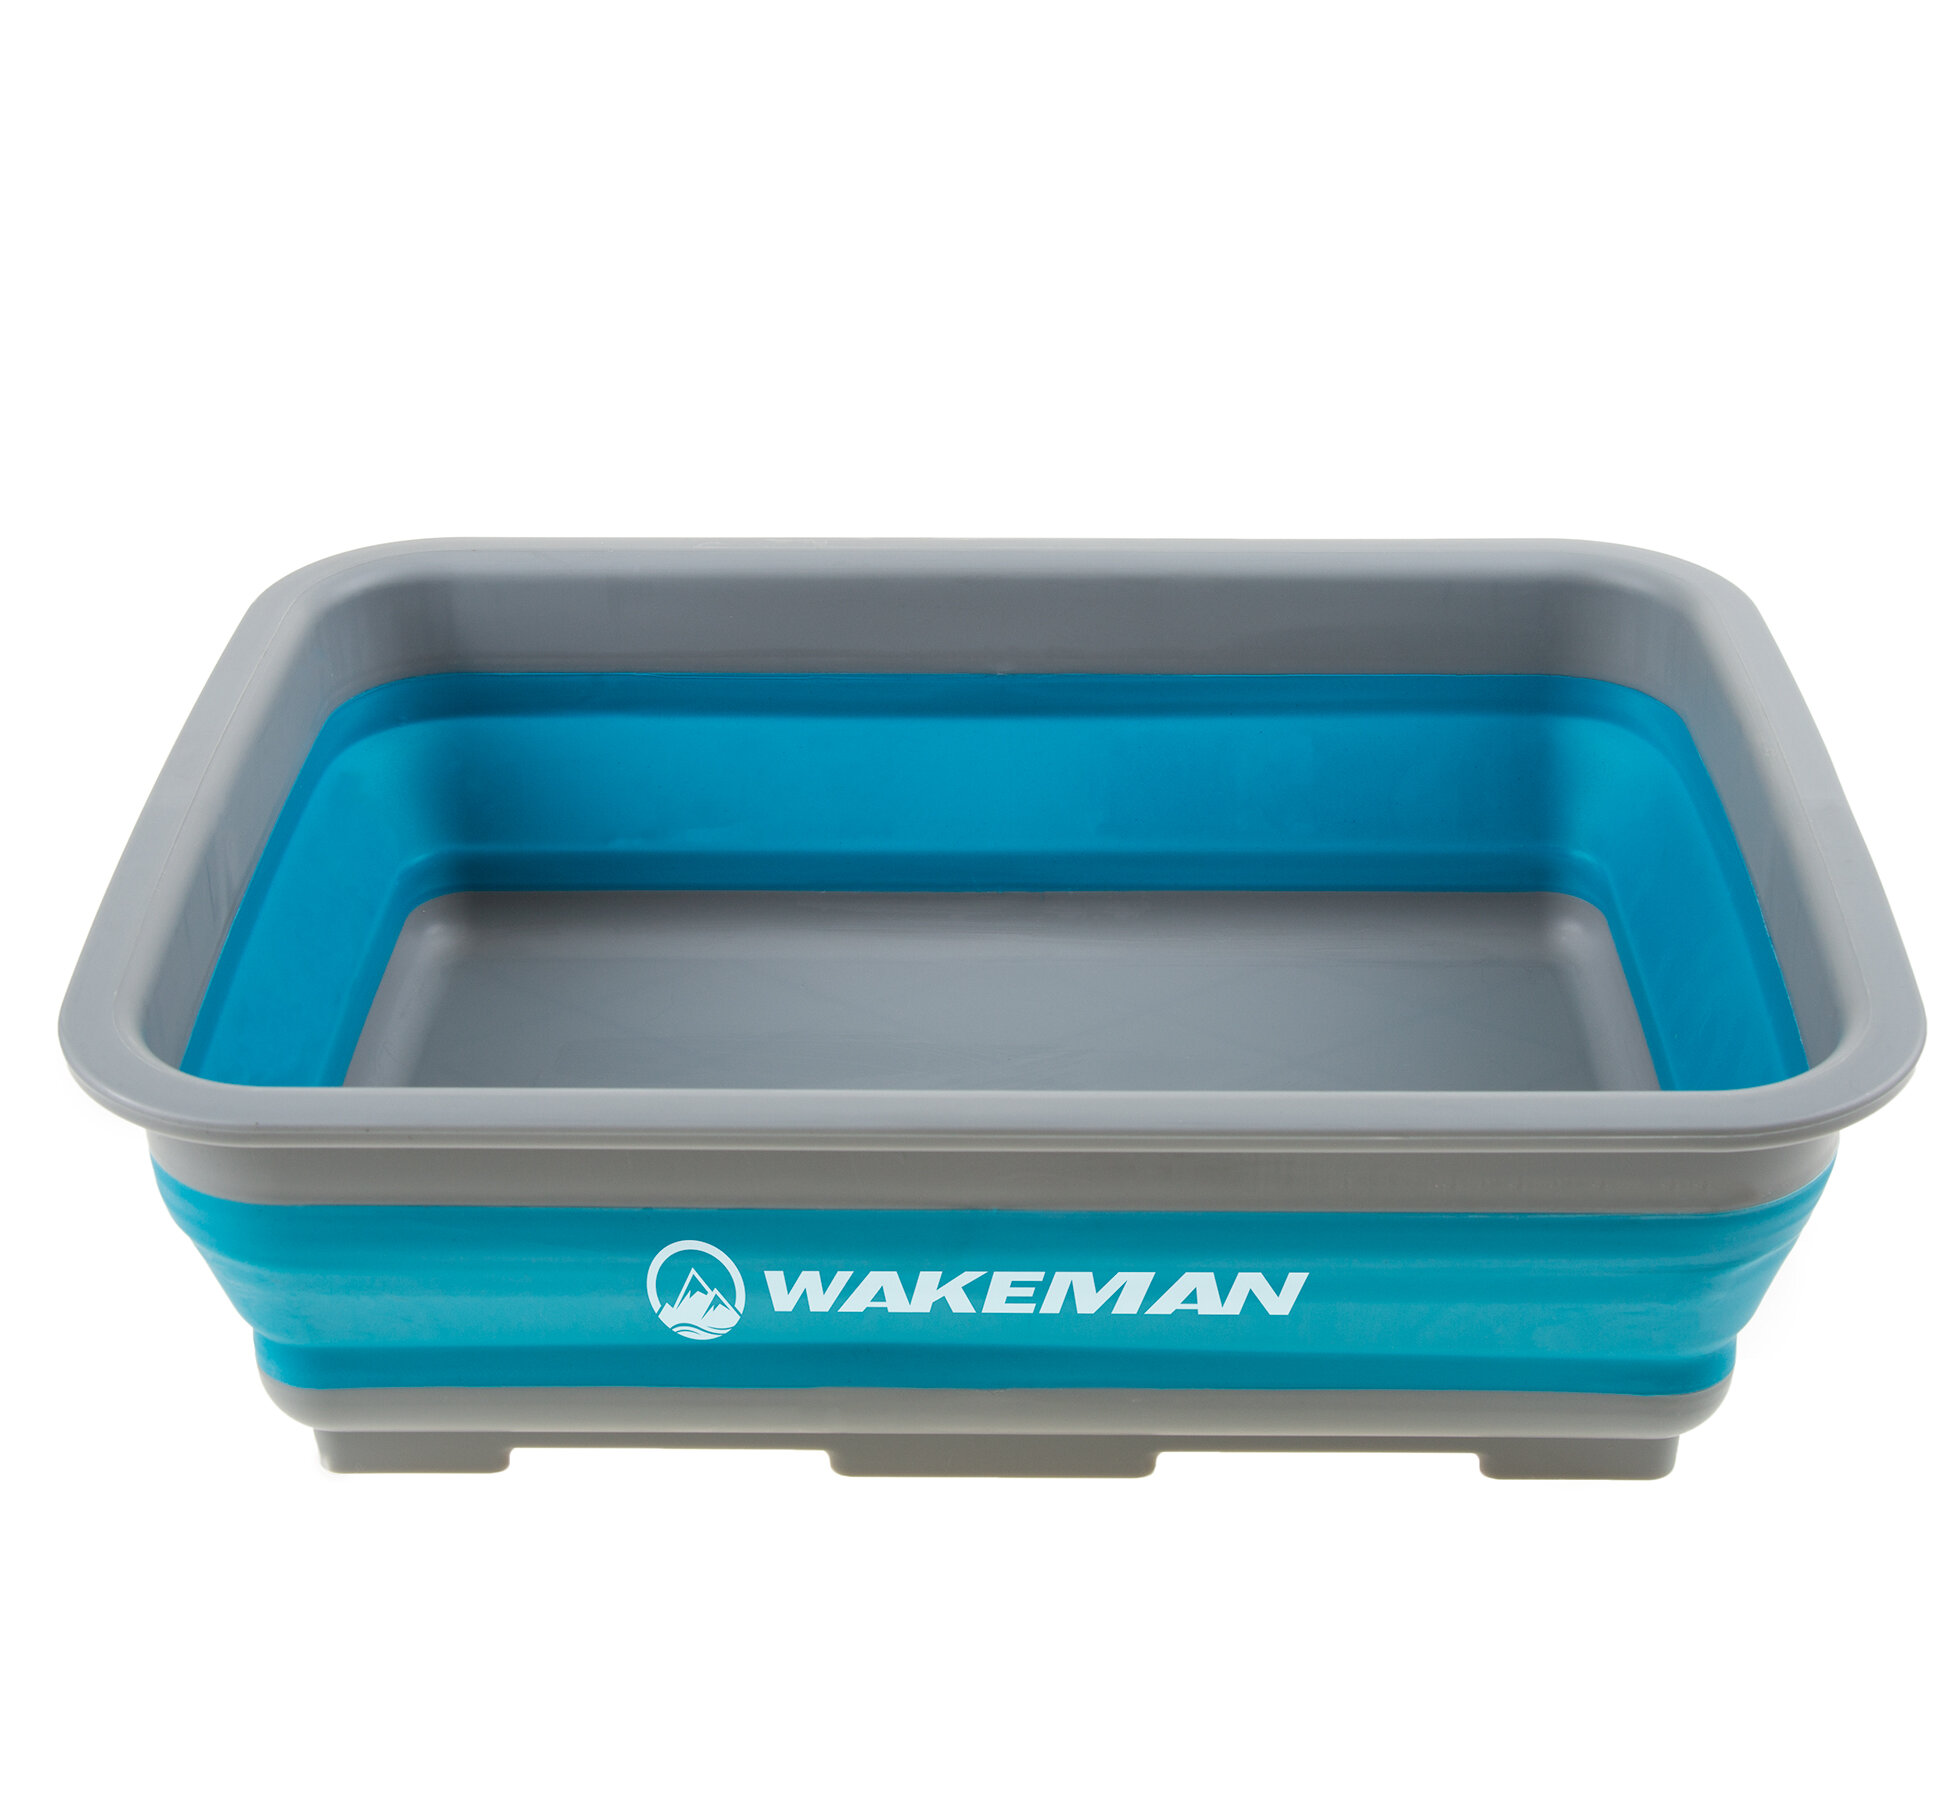 Wakeman 10L Collapsible Portable Camping Wash Basin - Blue